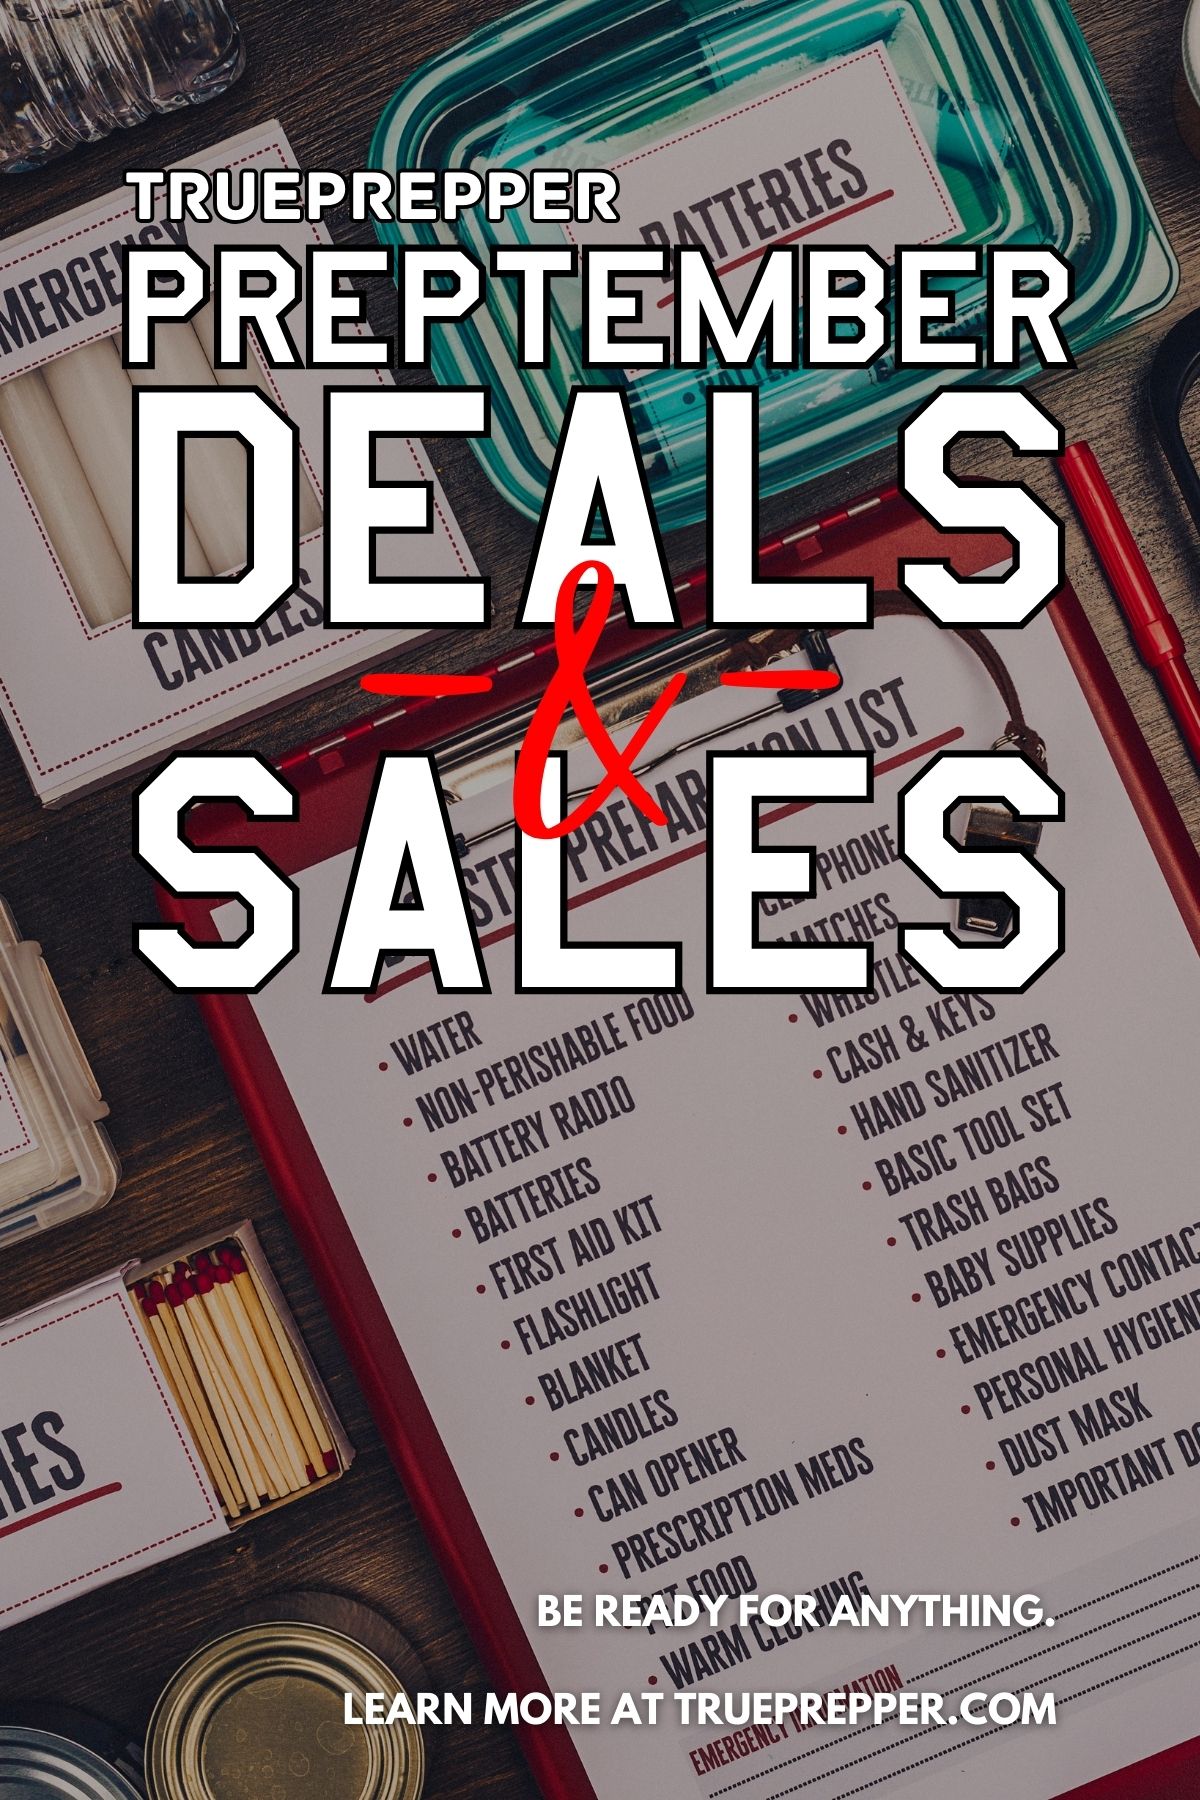 Preptember Deals & Sales